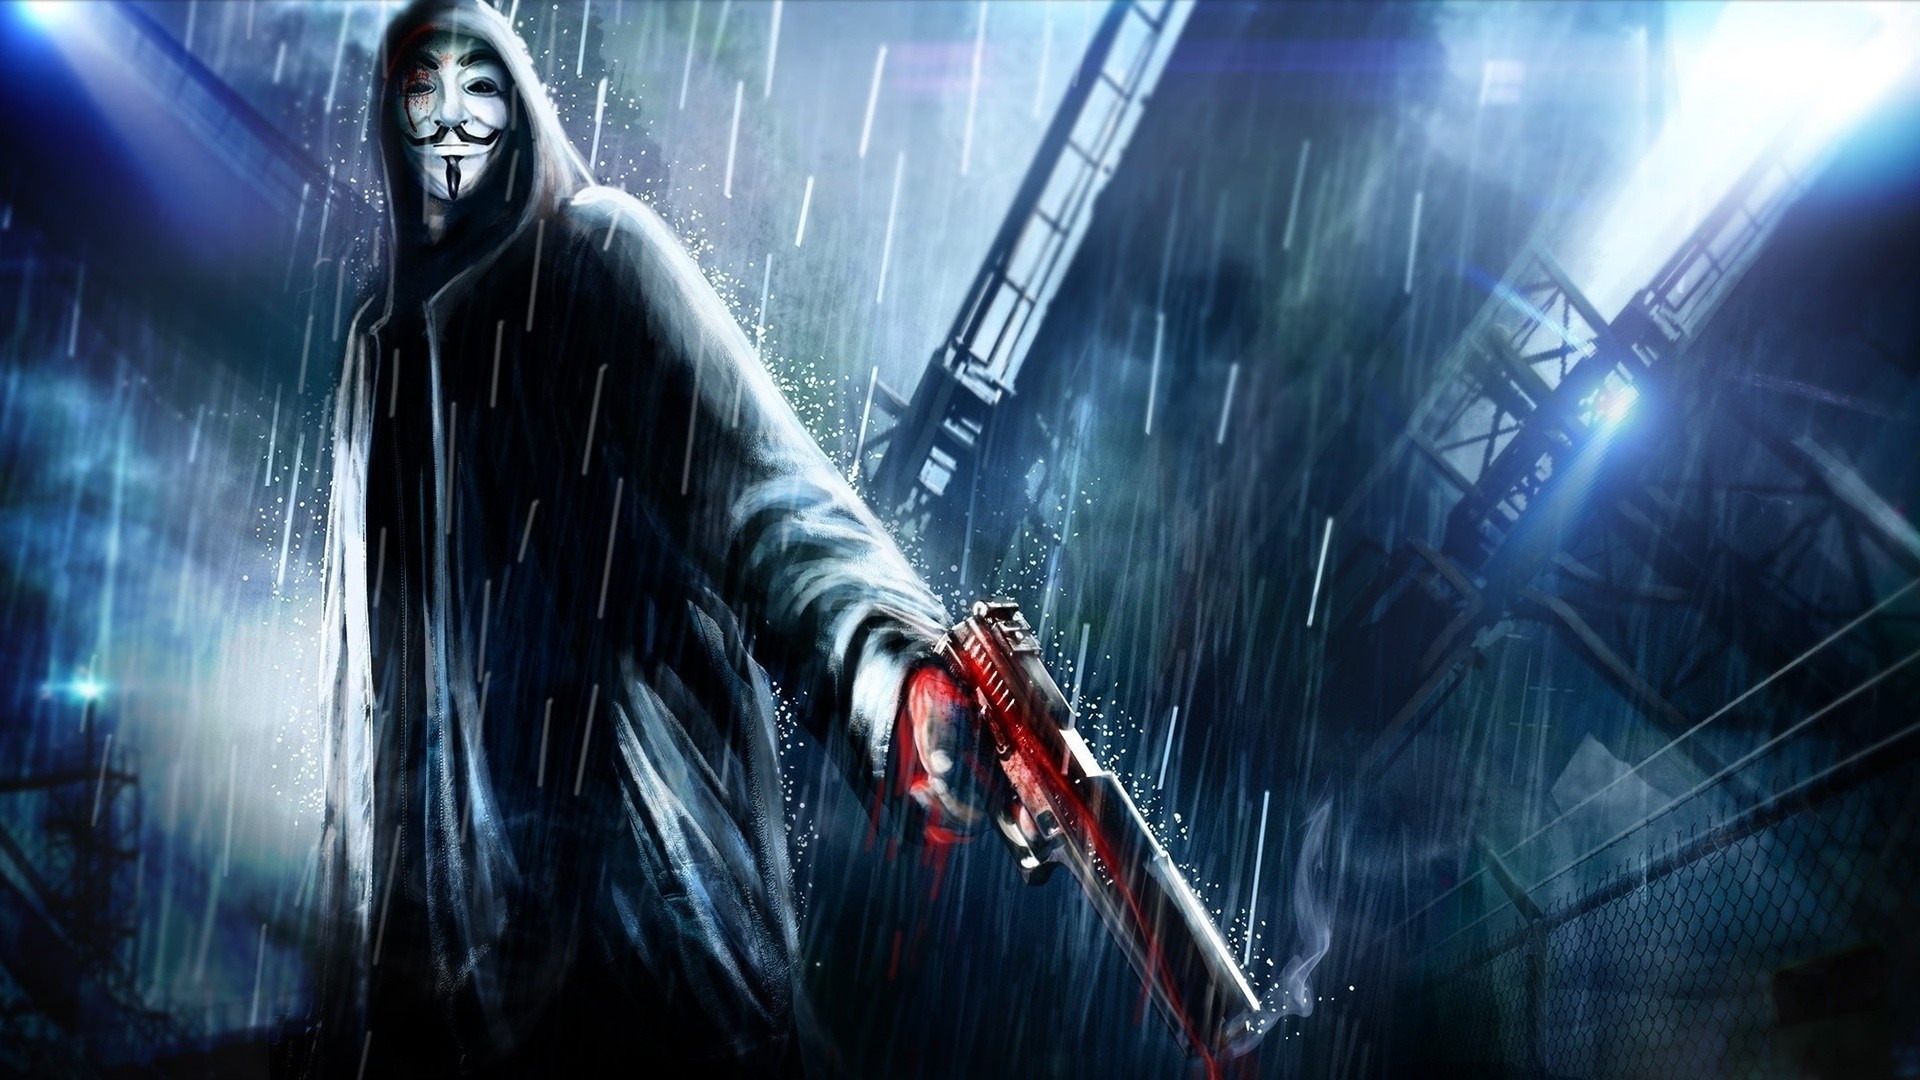 General 1920x1080 Anonymous (hacker group) artwork gun rain Guy Fawkes mask blood weapon